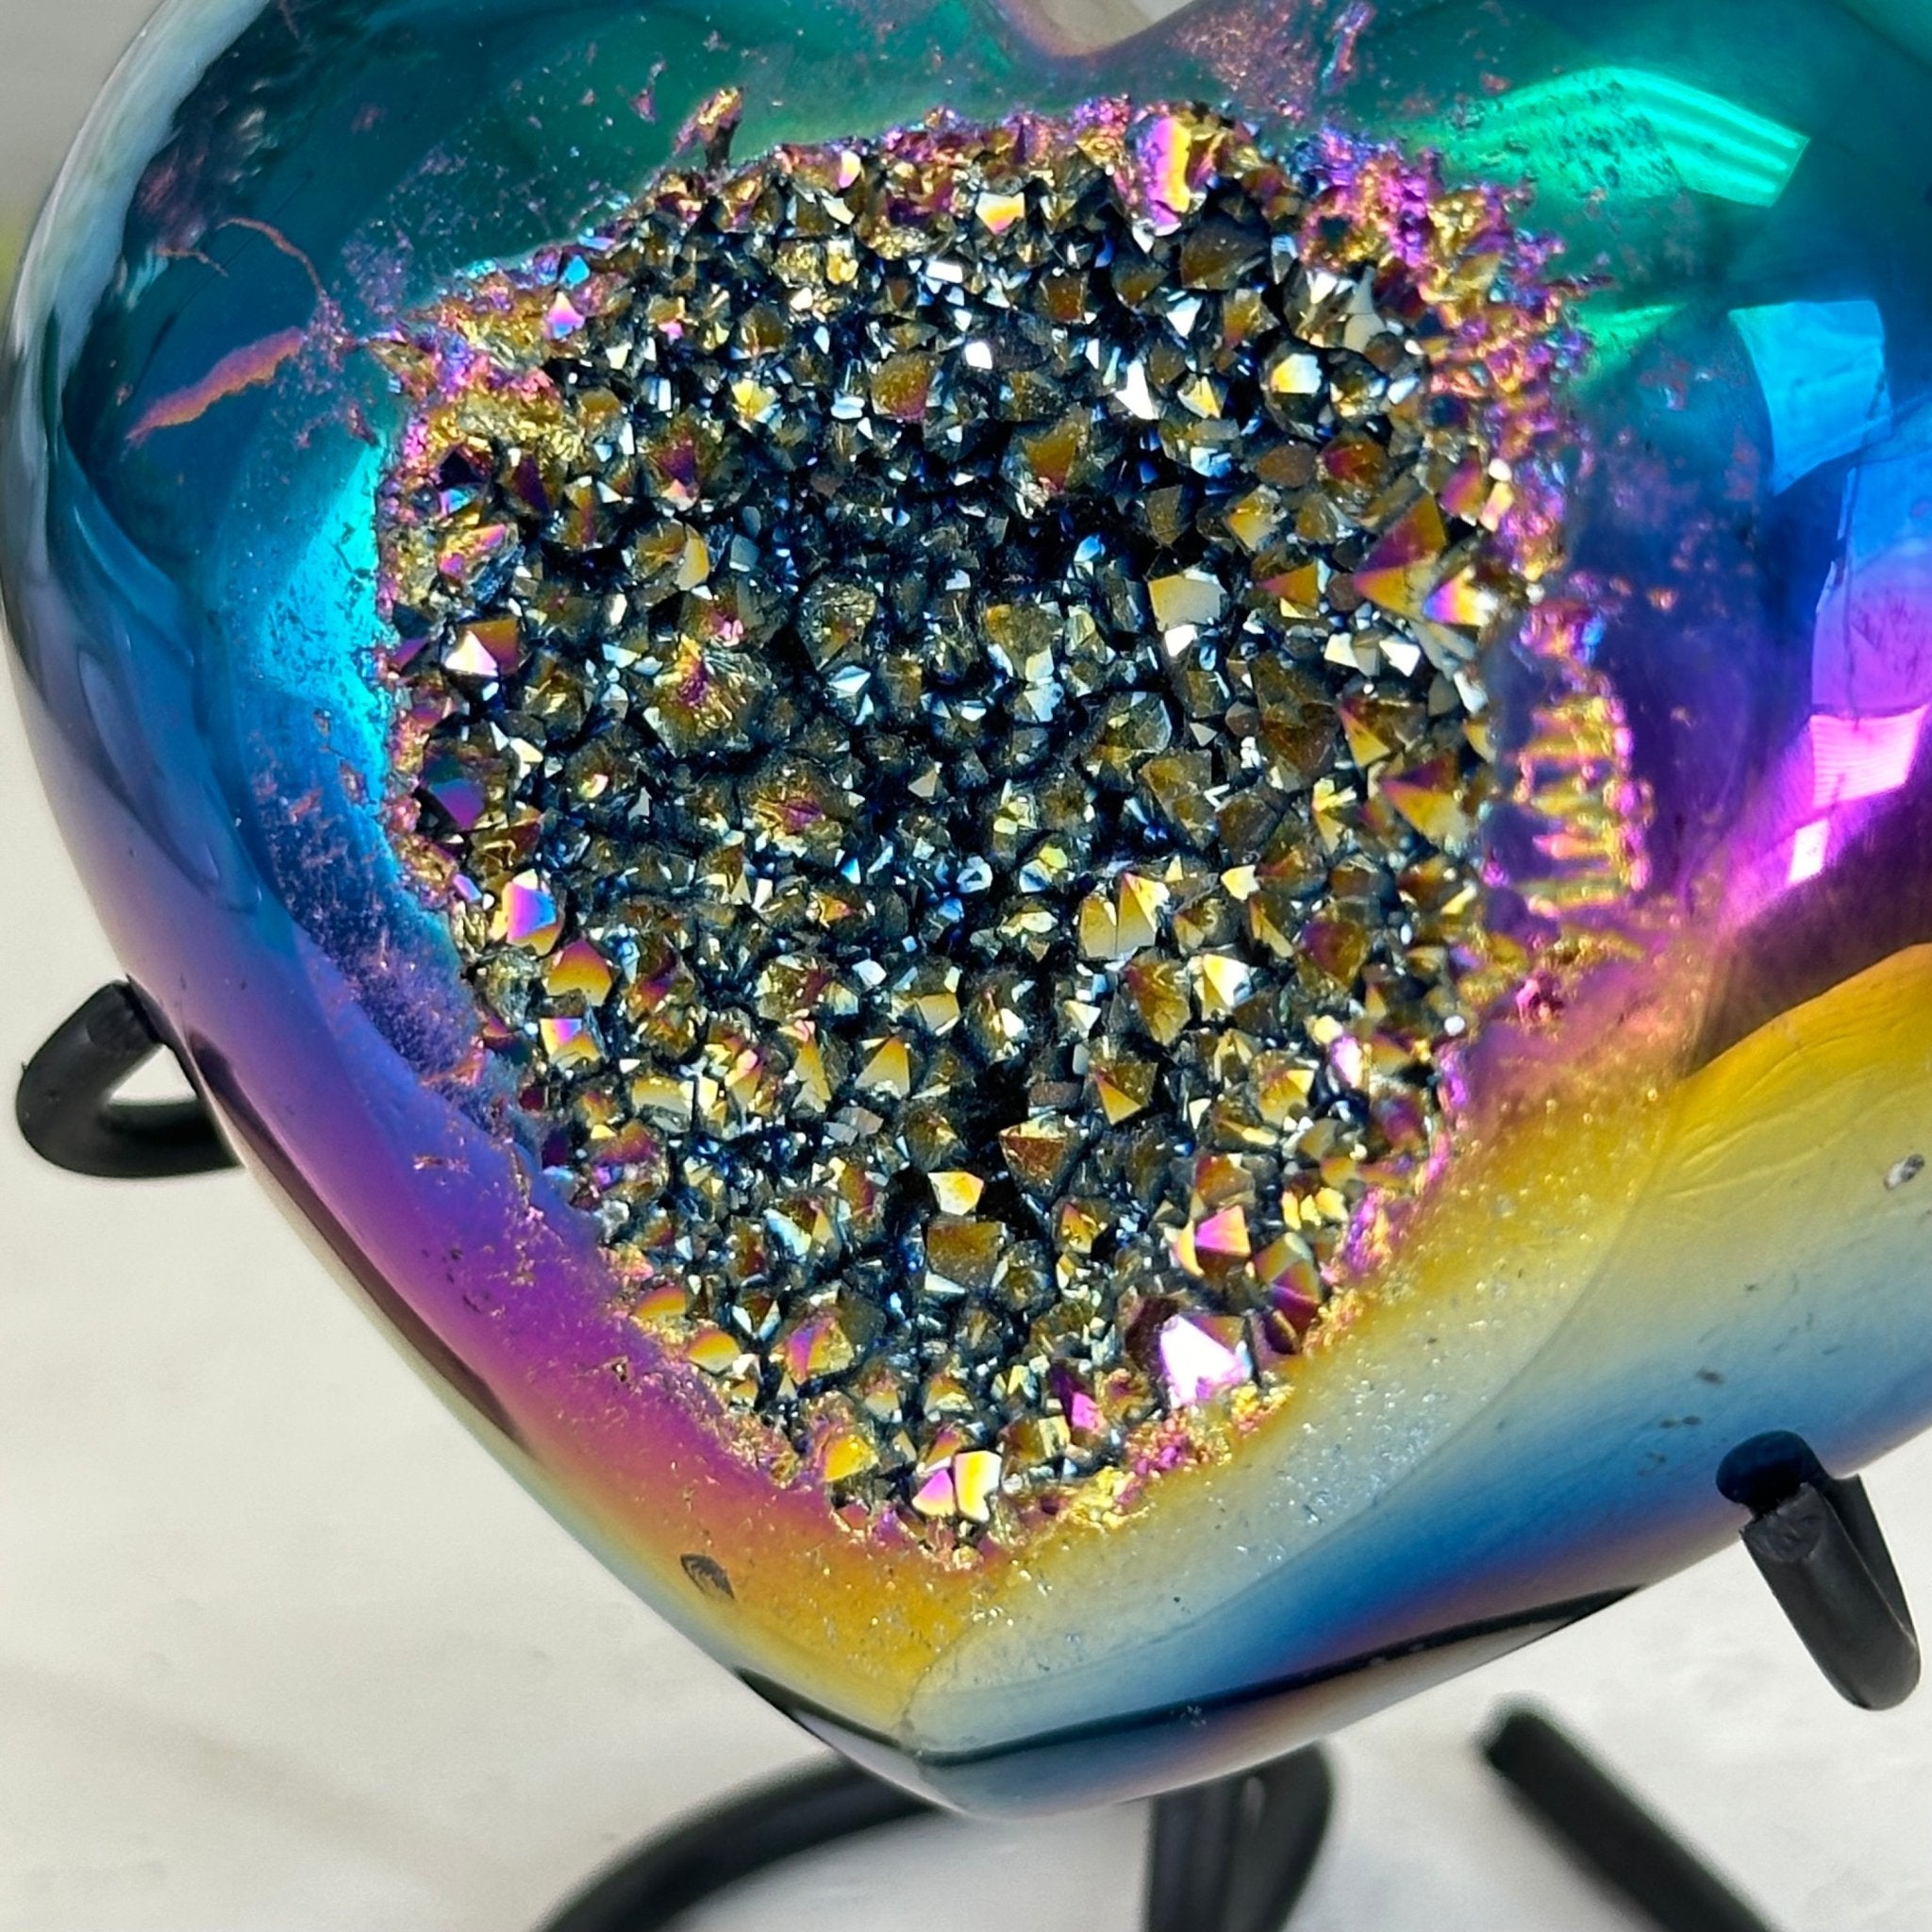 Rainbow Aura Amethyst Heart on a Metal Stand, 0.6 lbs & 3.6" Tall #5463RA-019 - Brazil GemsBrazil GemsRainbow Aura Amethyst Heart on a Metal Stand, 0.6 lbs & 3.6" Tall #5463RA-019Hearts5463RA-019